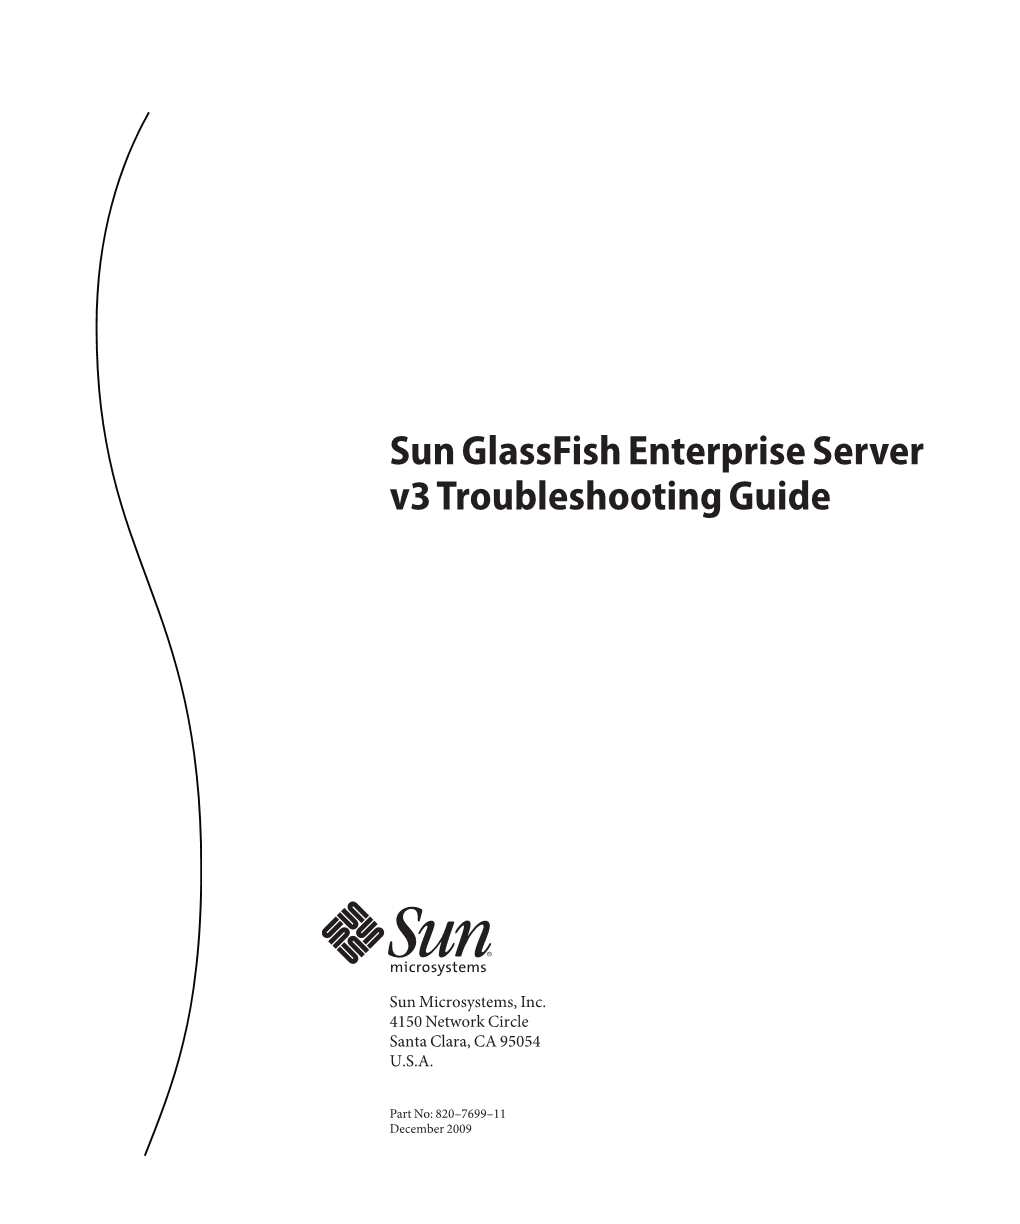 Sun Glassfish Enterprise Server V3 Troubleshooting Guide